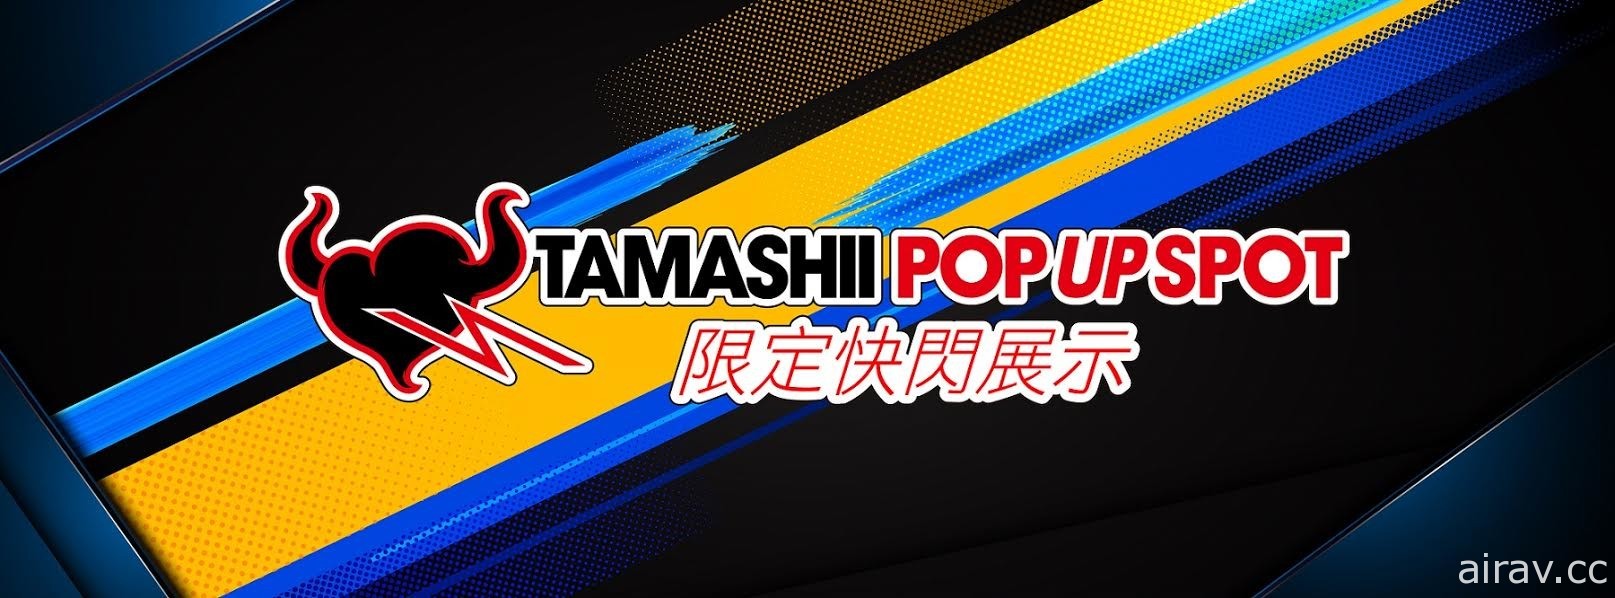 「TAMASHII POP UP SPOT」收藏玩具限定快閃展示 28 日起於台北地下街登場